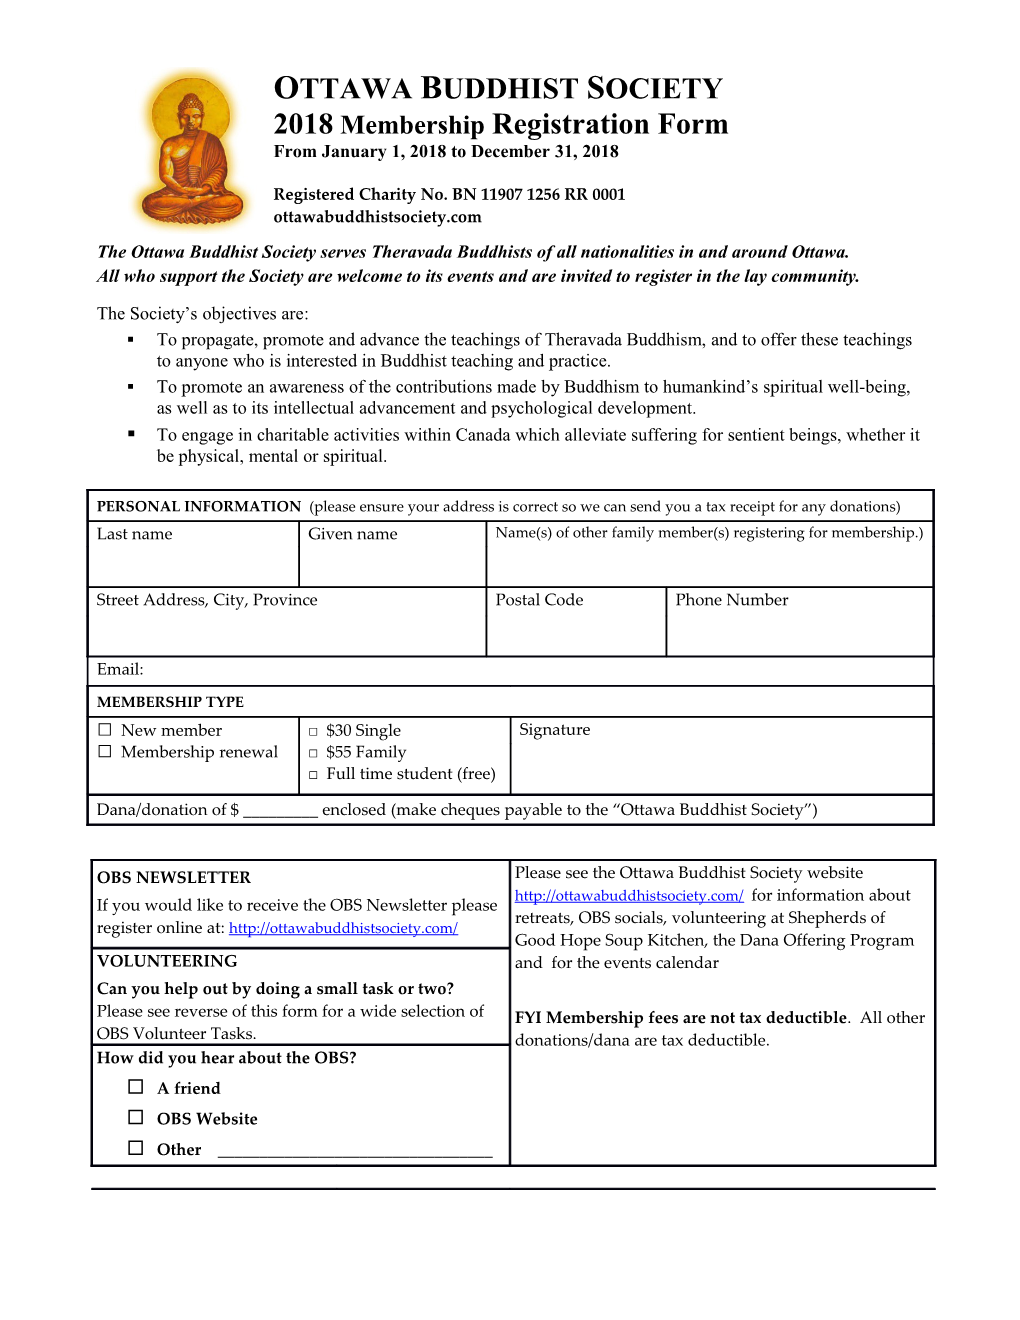 Membership 2003: Ottawa Buddhist Society